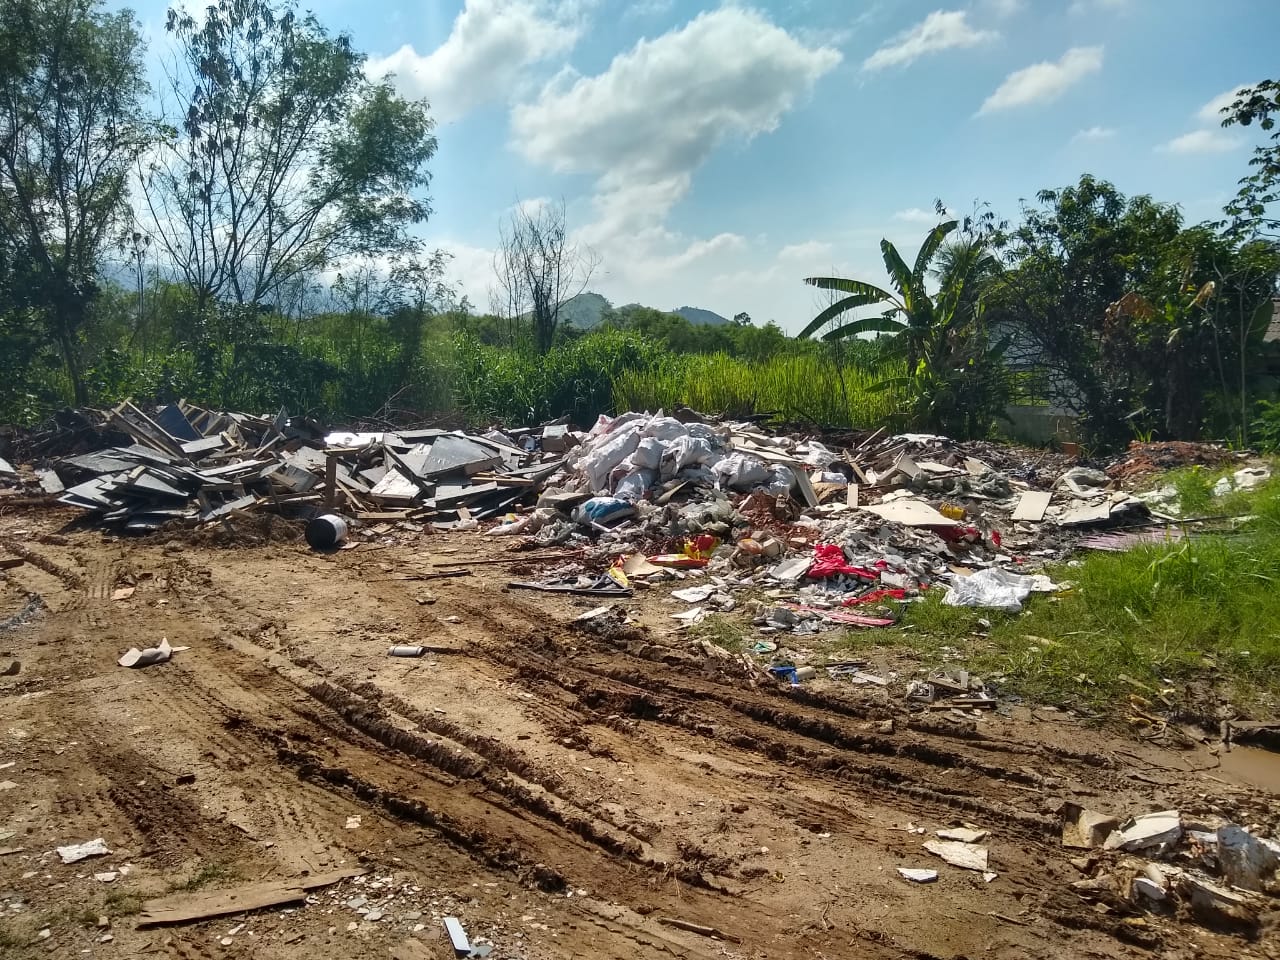 Denúncia leva policia ambiental a identificar terreno para despejo de lixo e entulho